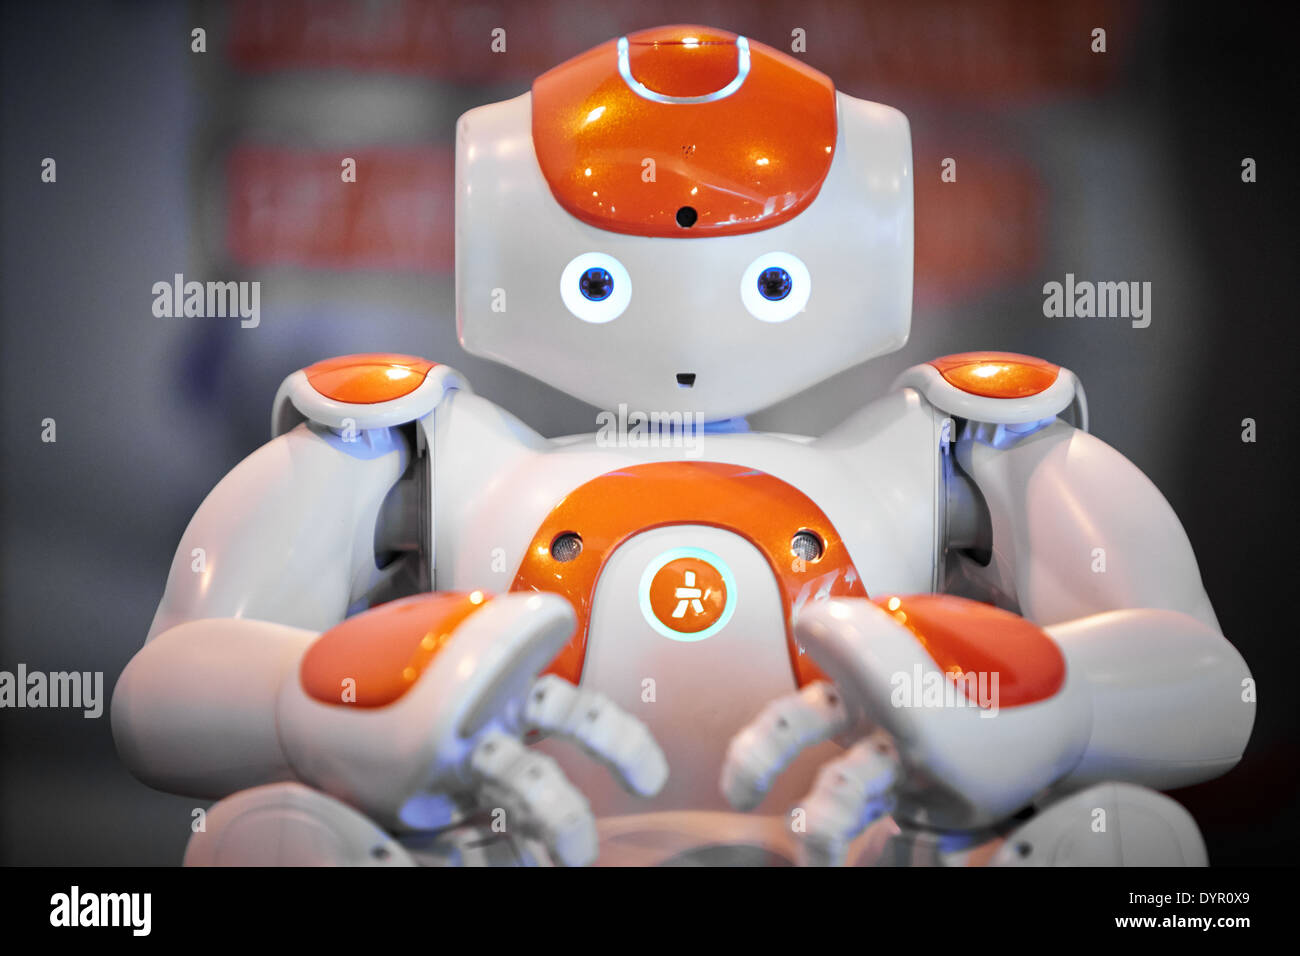 Aldebaran nao robot hi-res stock photography and images - Alamy